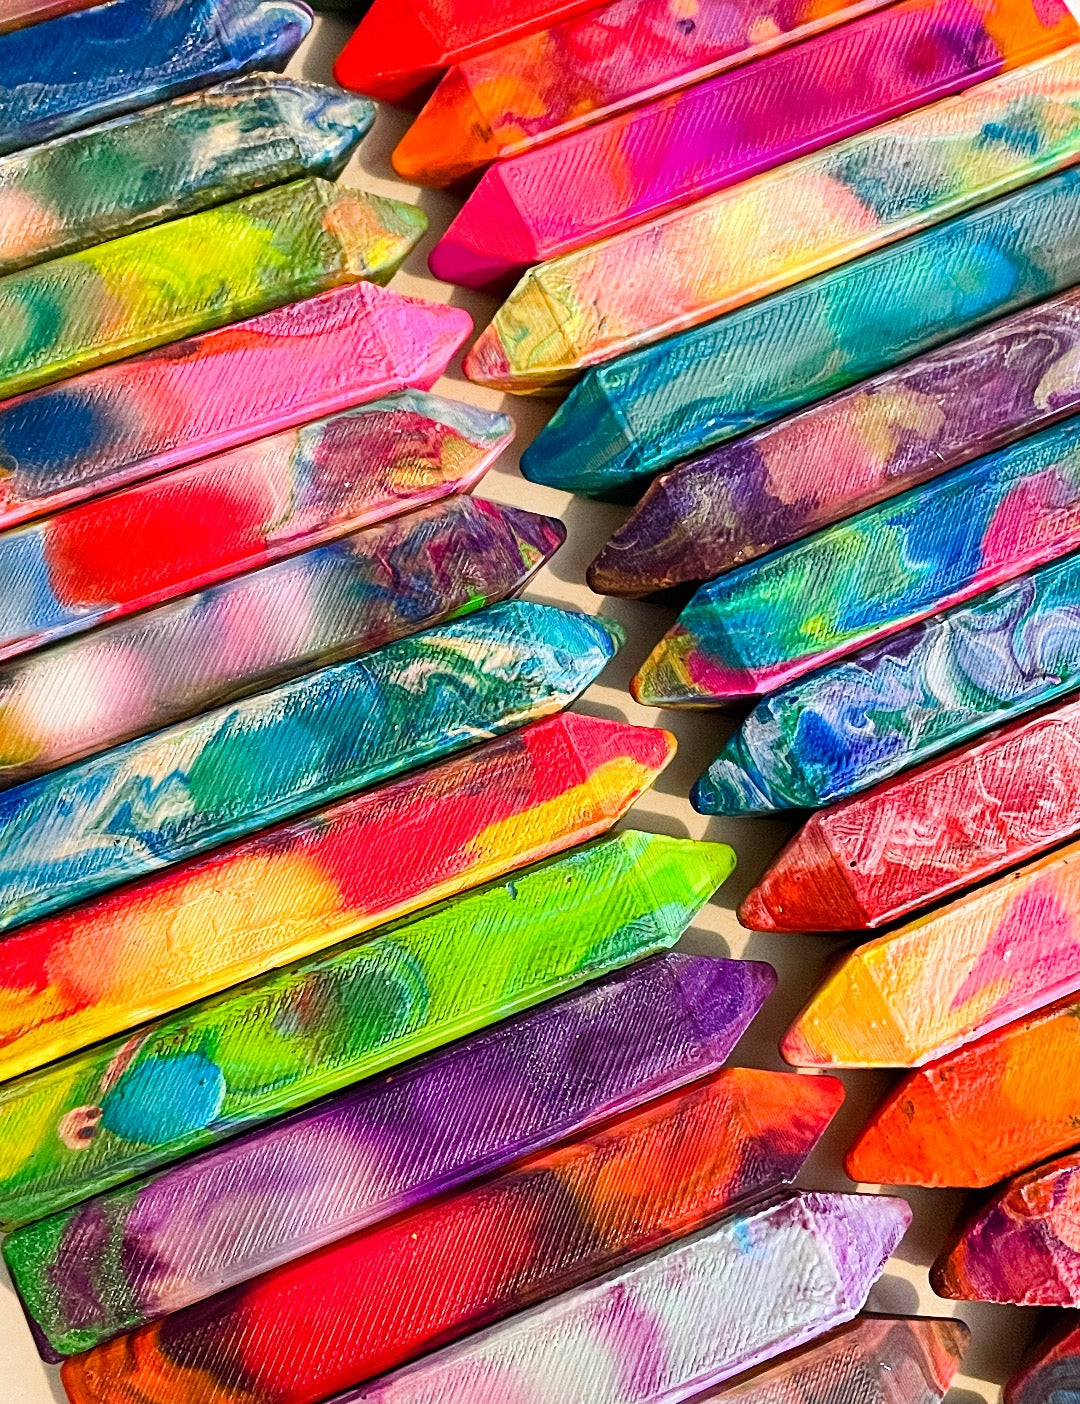 Rainbow Crayon Stix